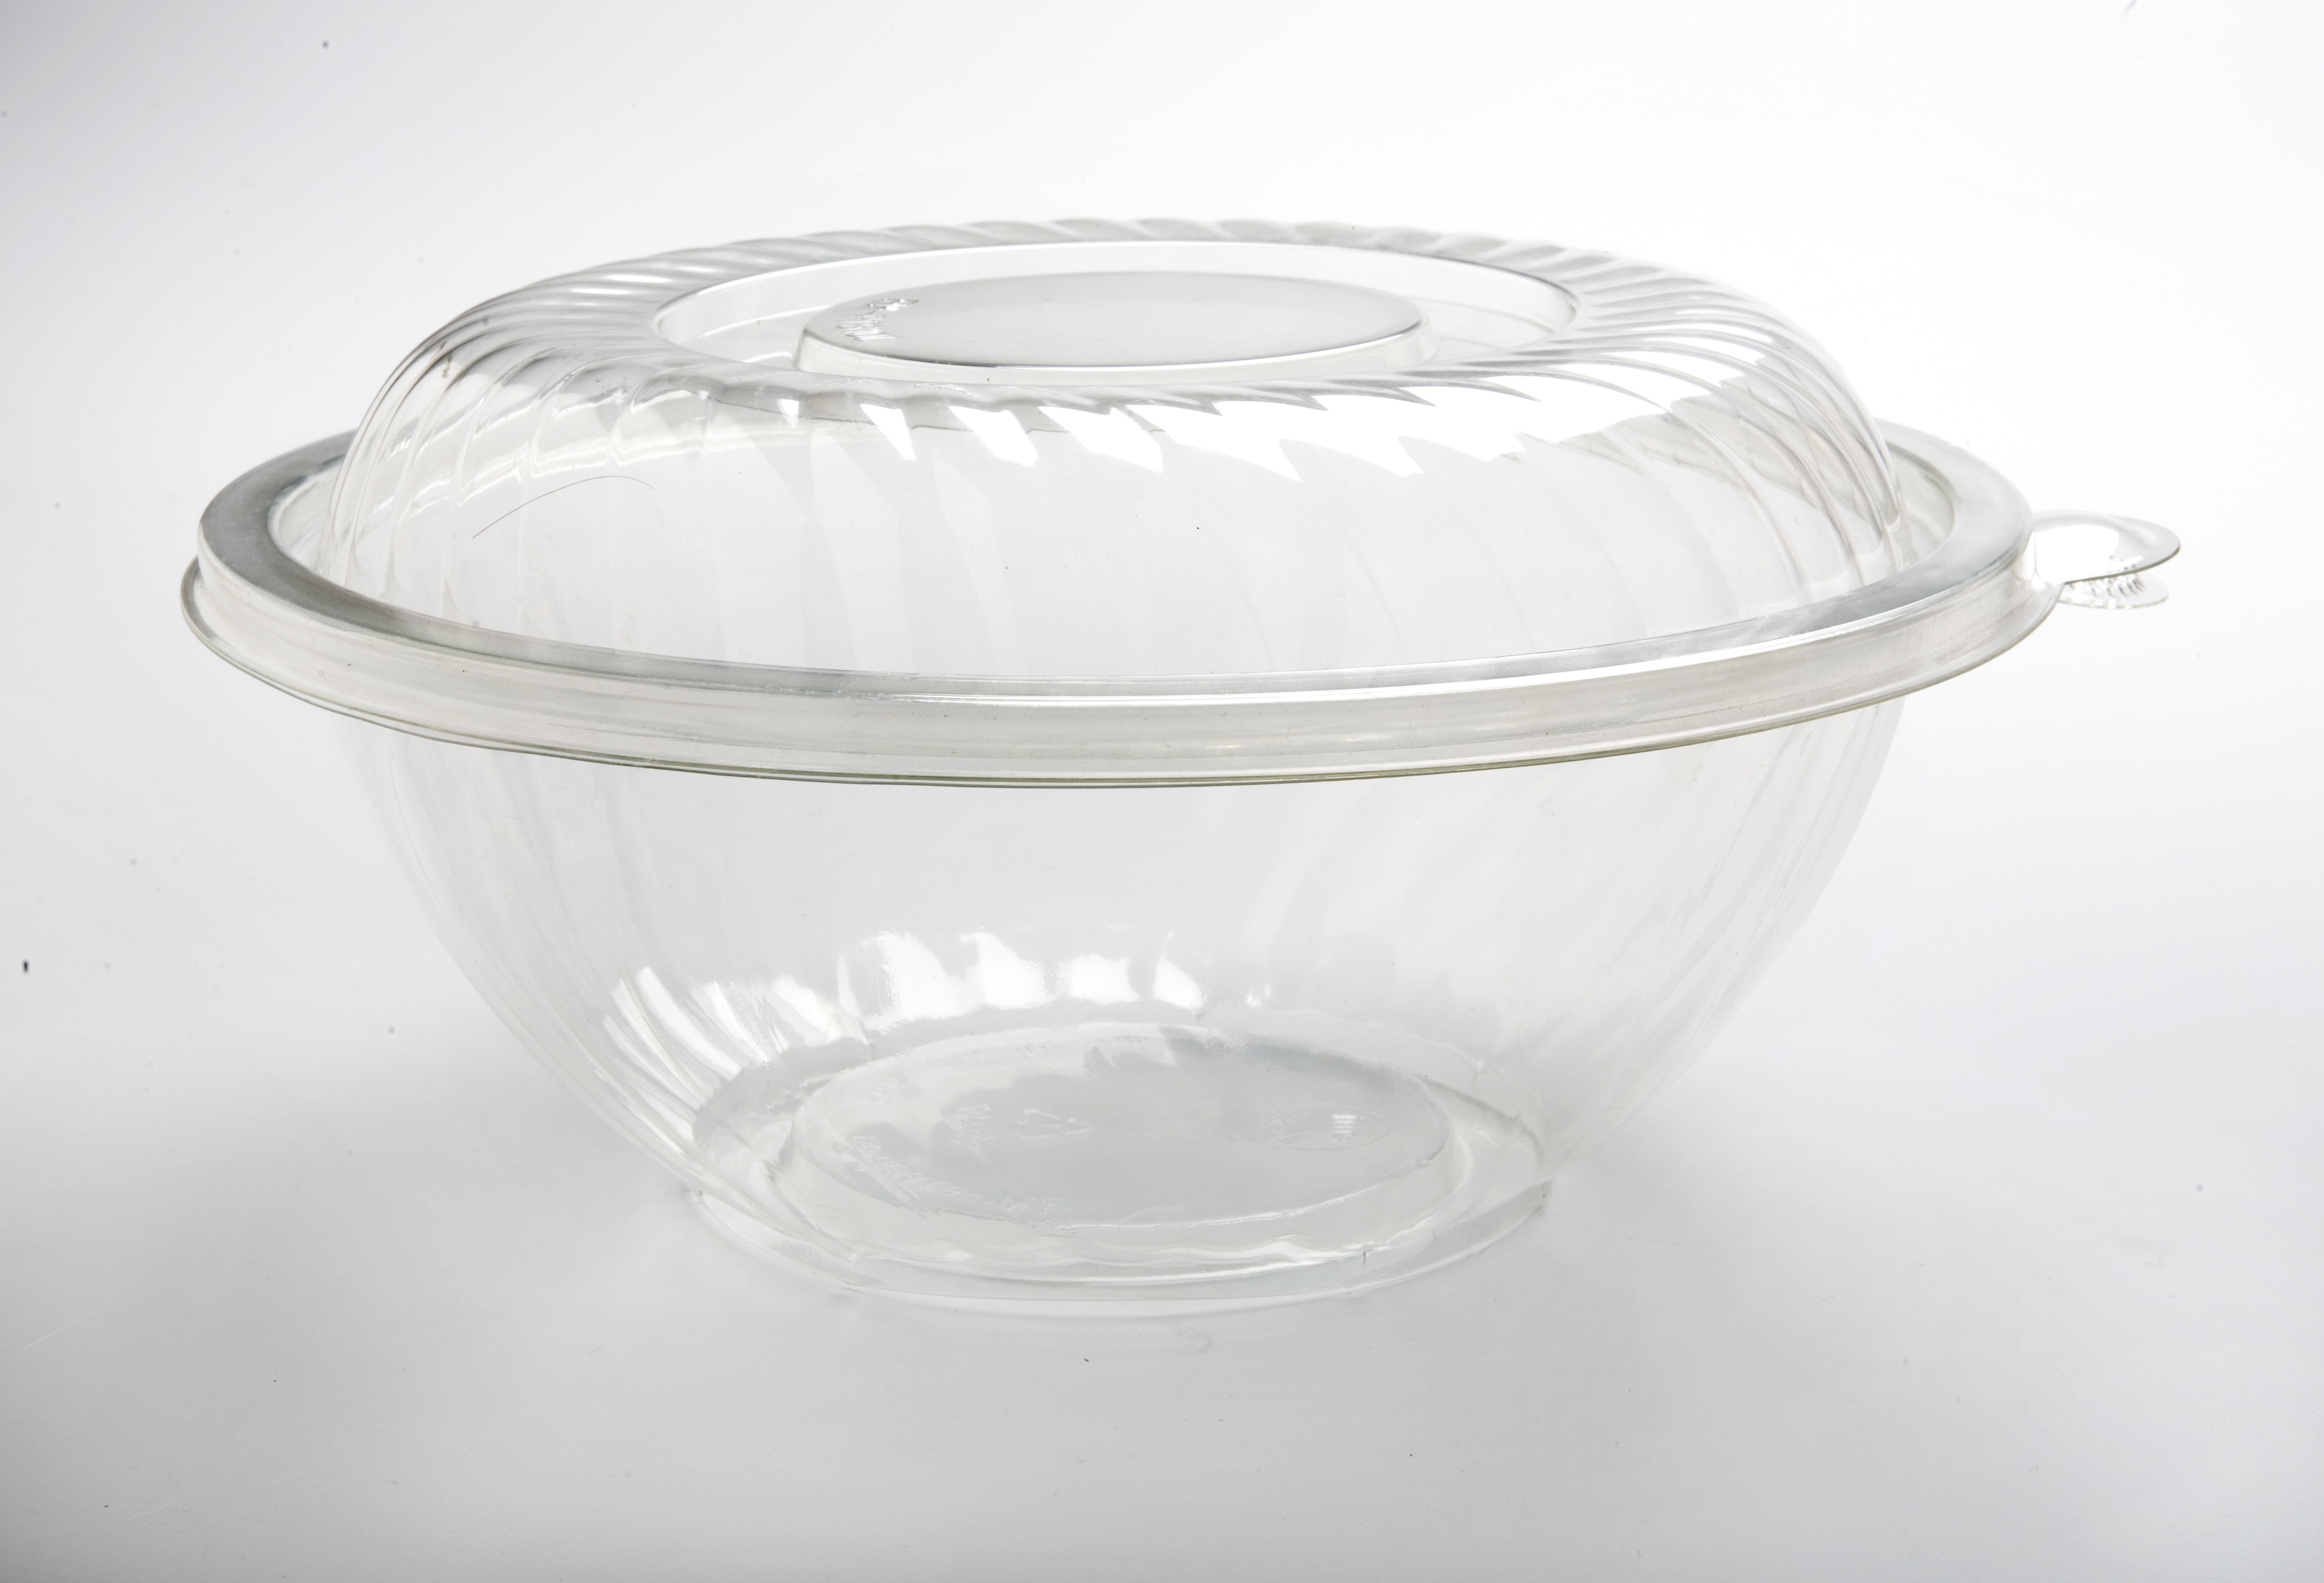 Plastic Bowls